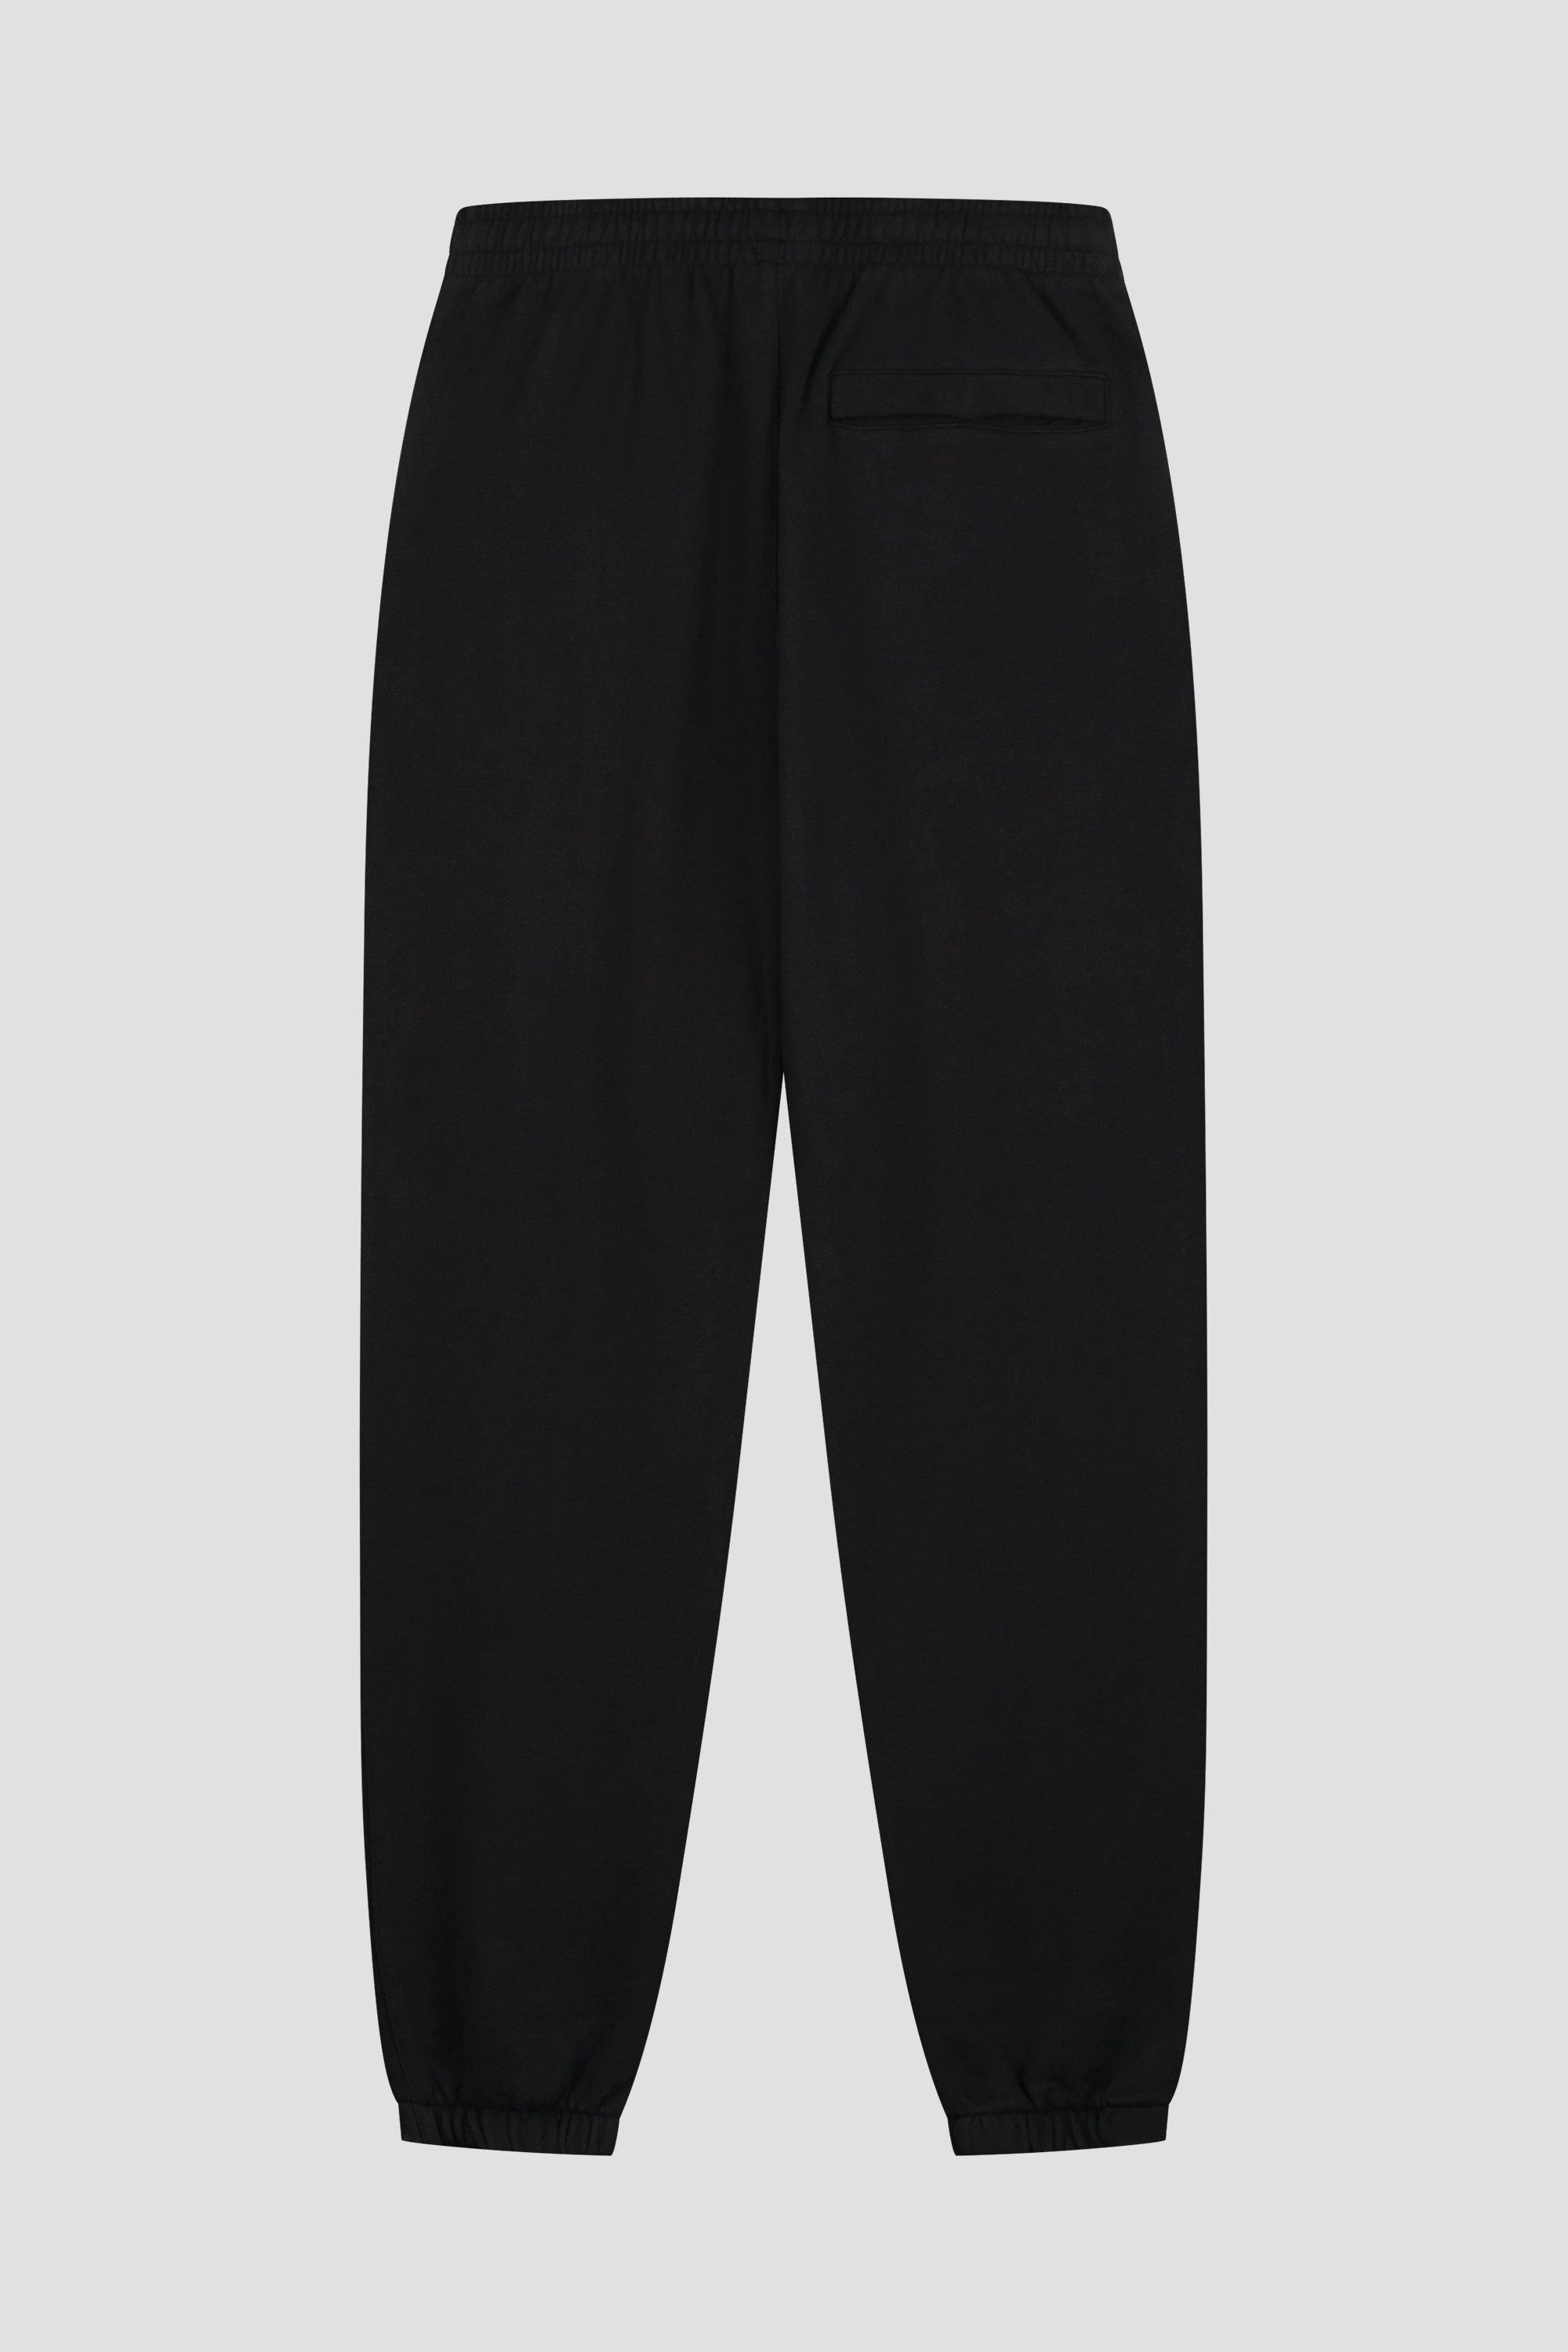 ØLÅF Uniform Sweatpants - Black